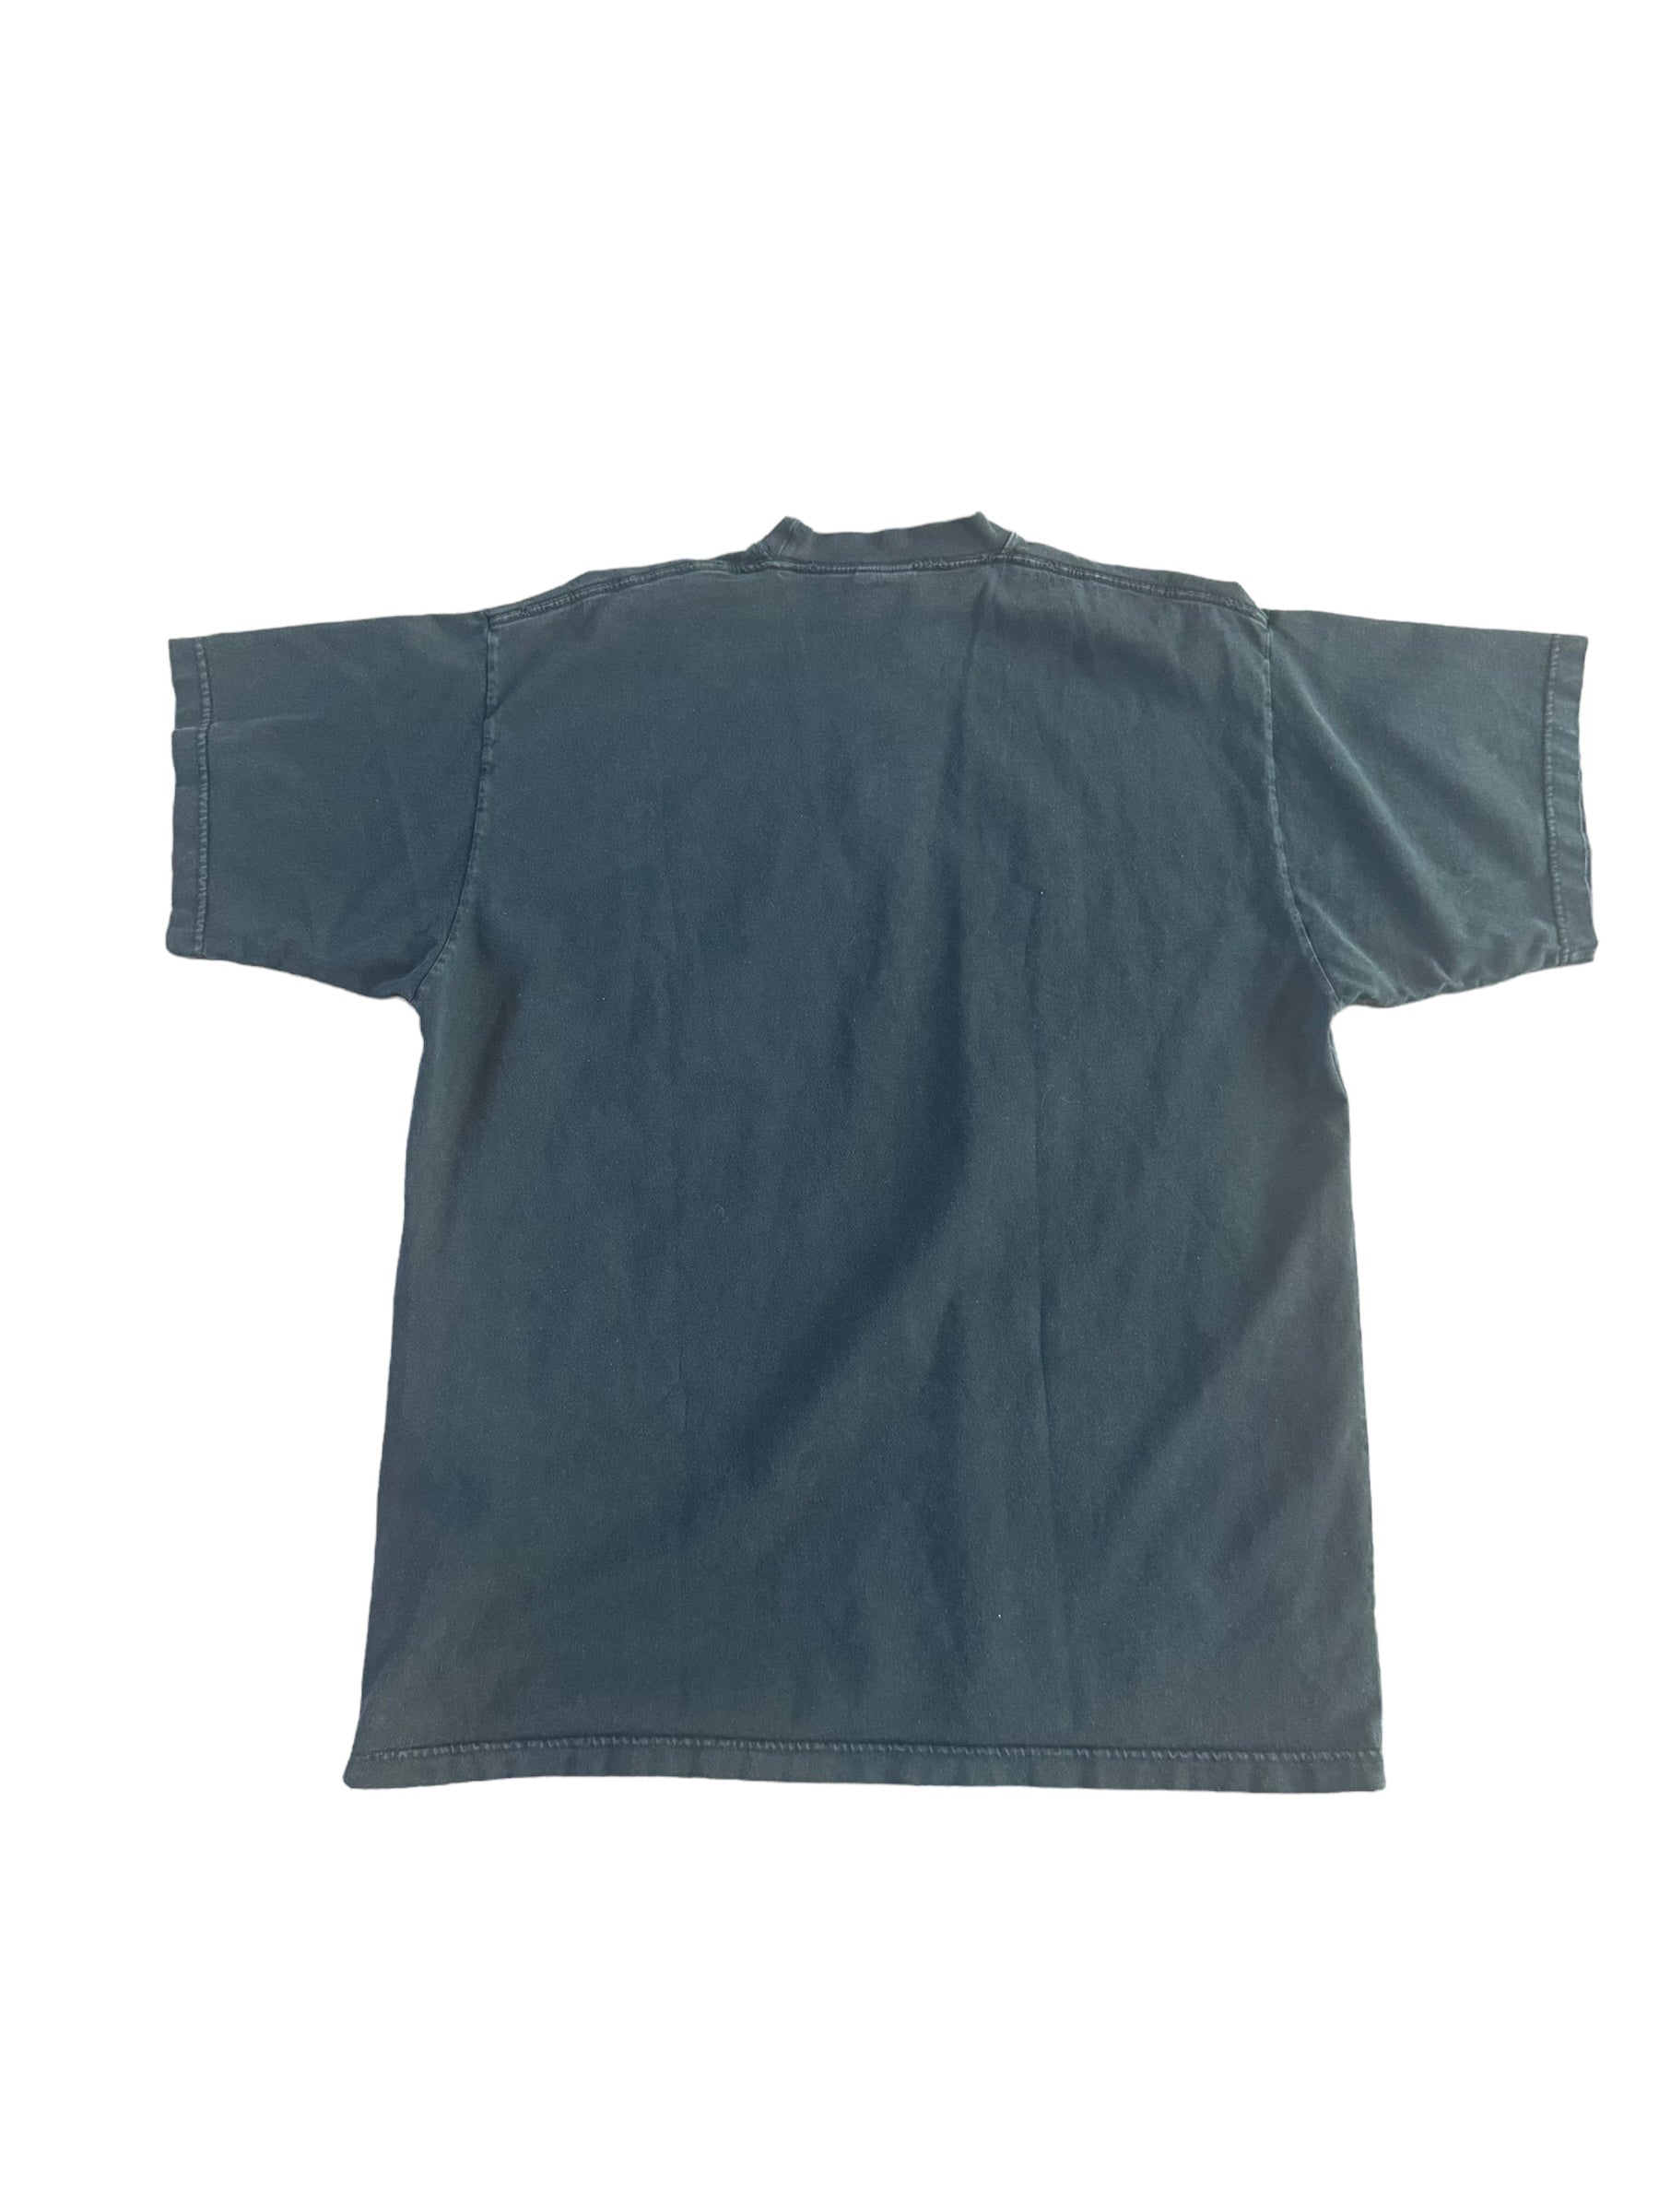 Balenciaga Apple Be Different T-Shirt - Swishy Archive